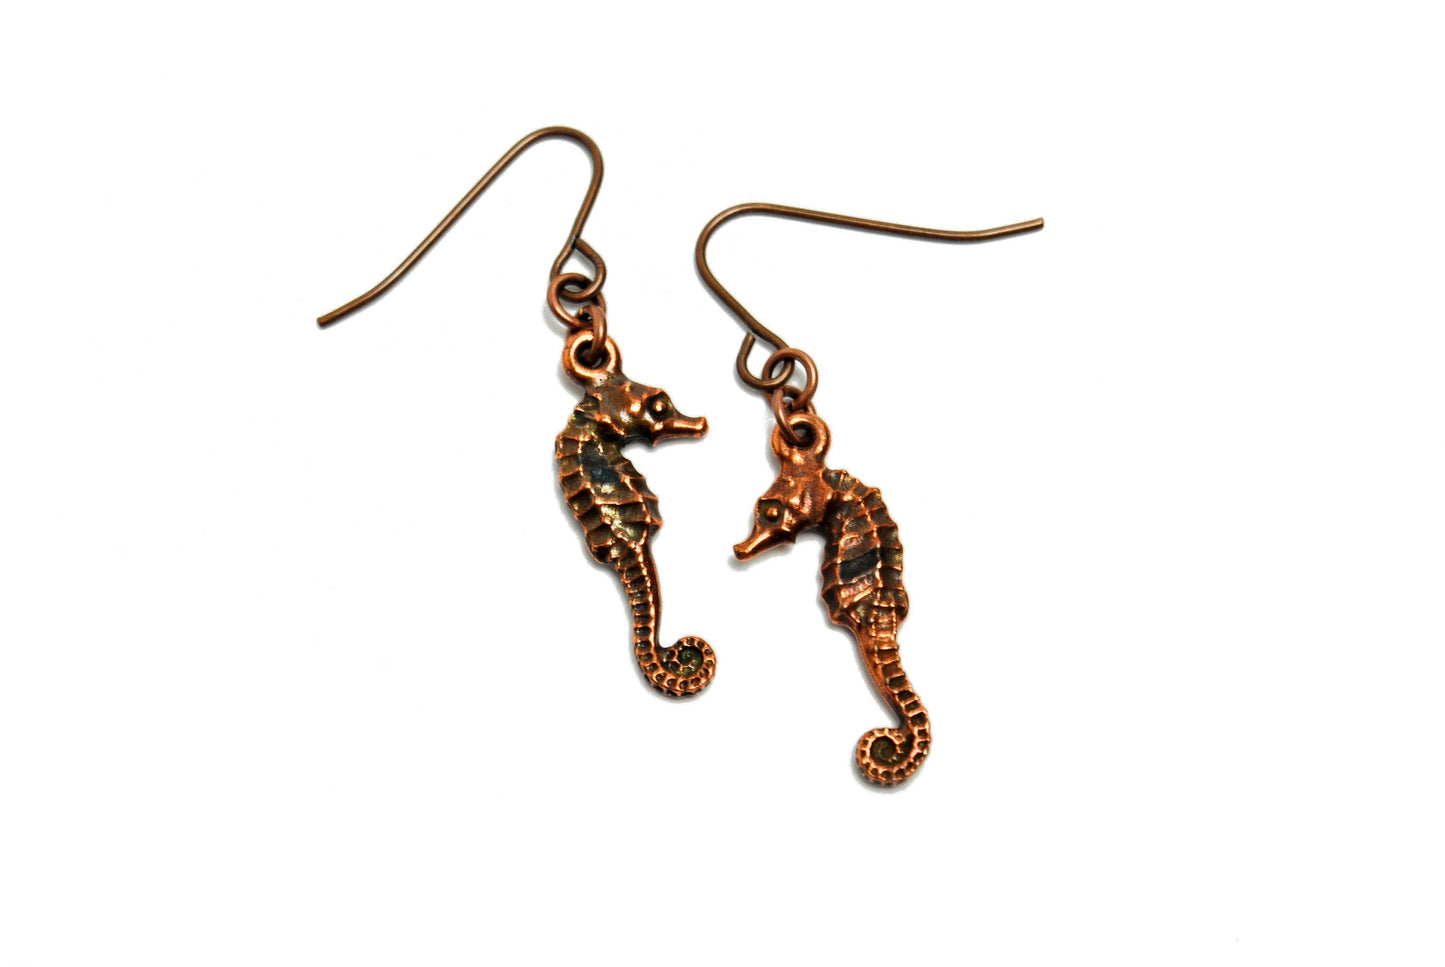 Seahorse Earrings in Antique Copper